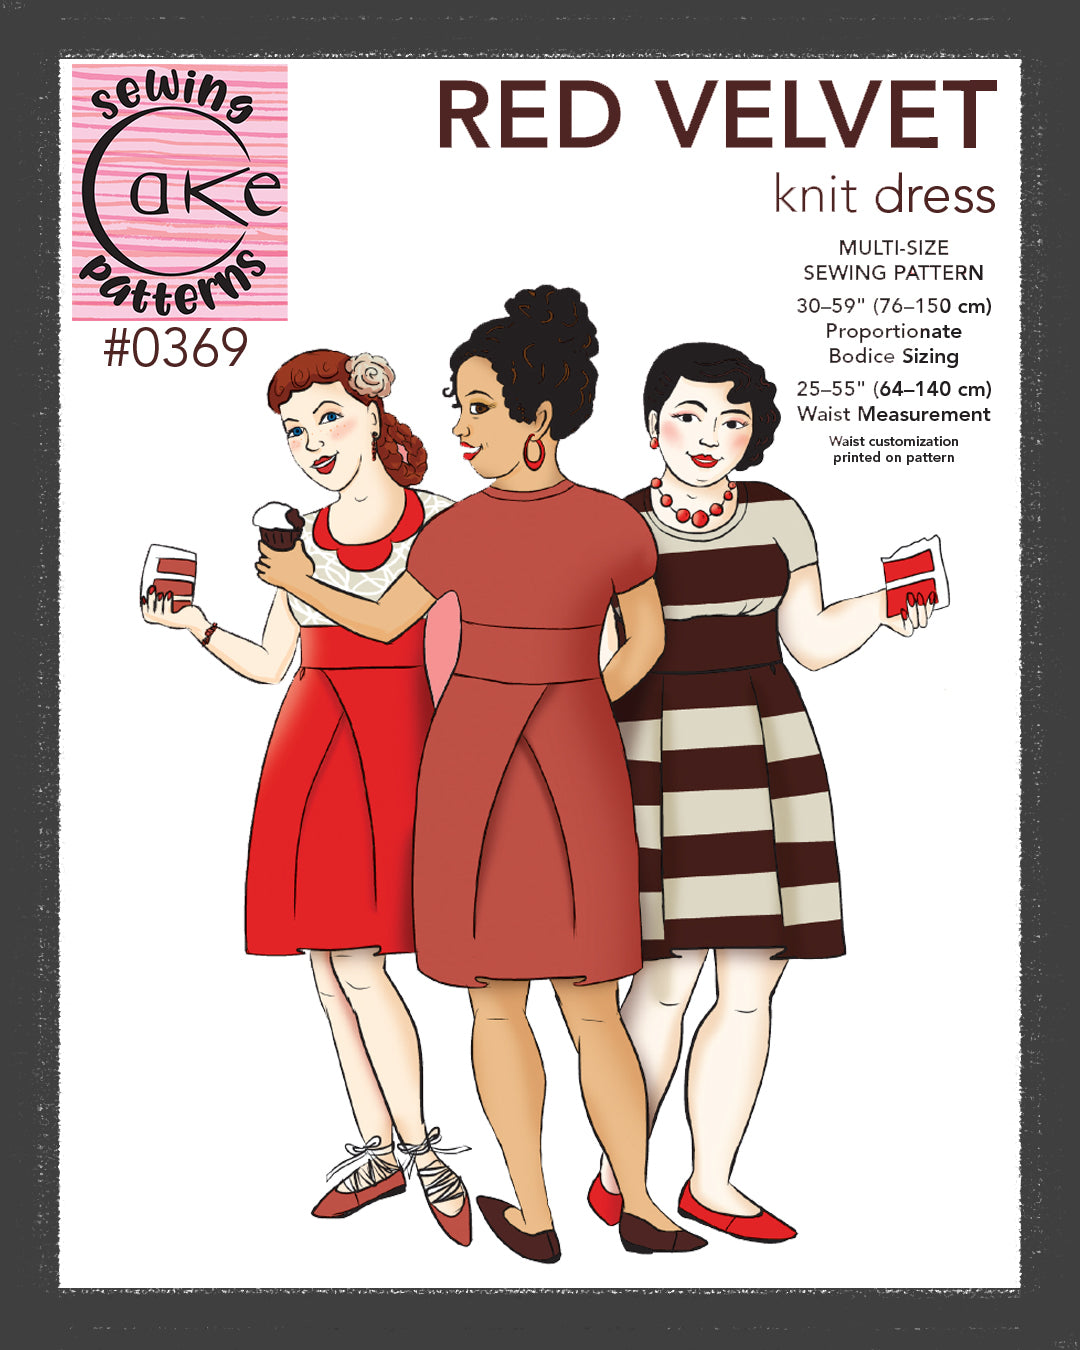 SEWING CAKE 0369 - RED VELVET KNIT DRESS (PRINTED)